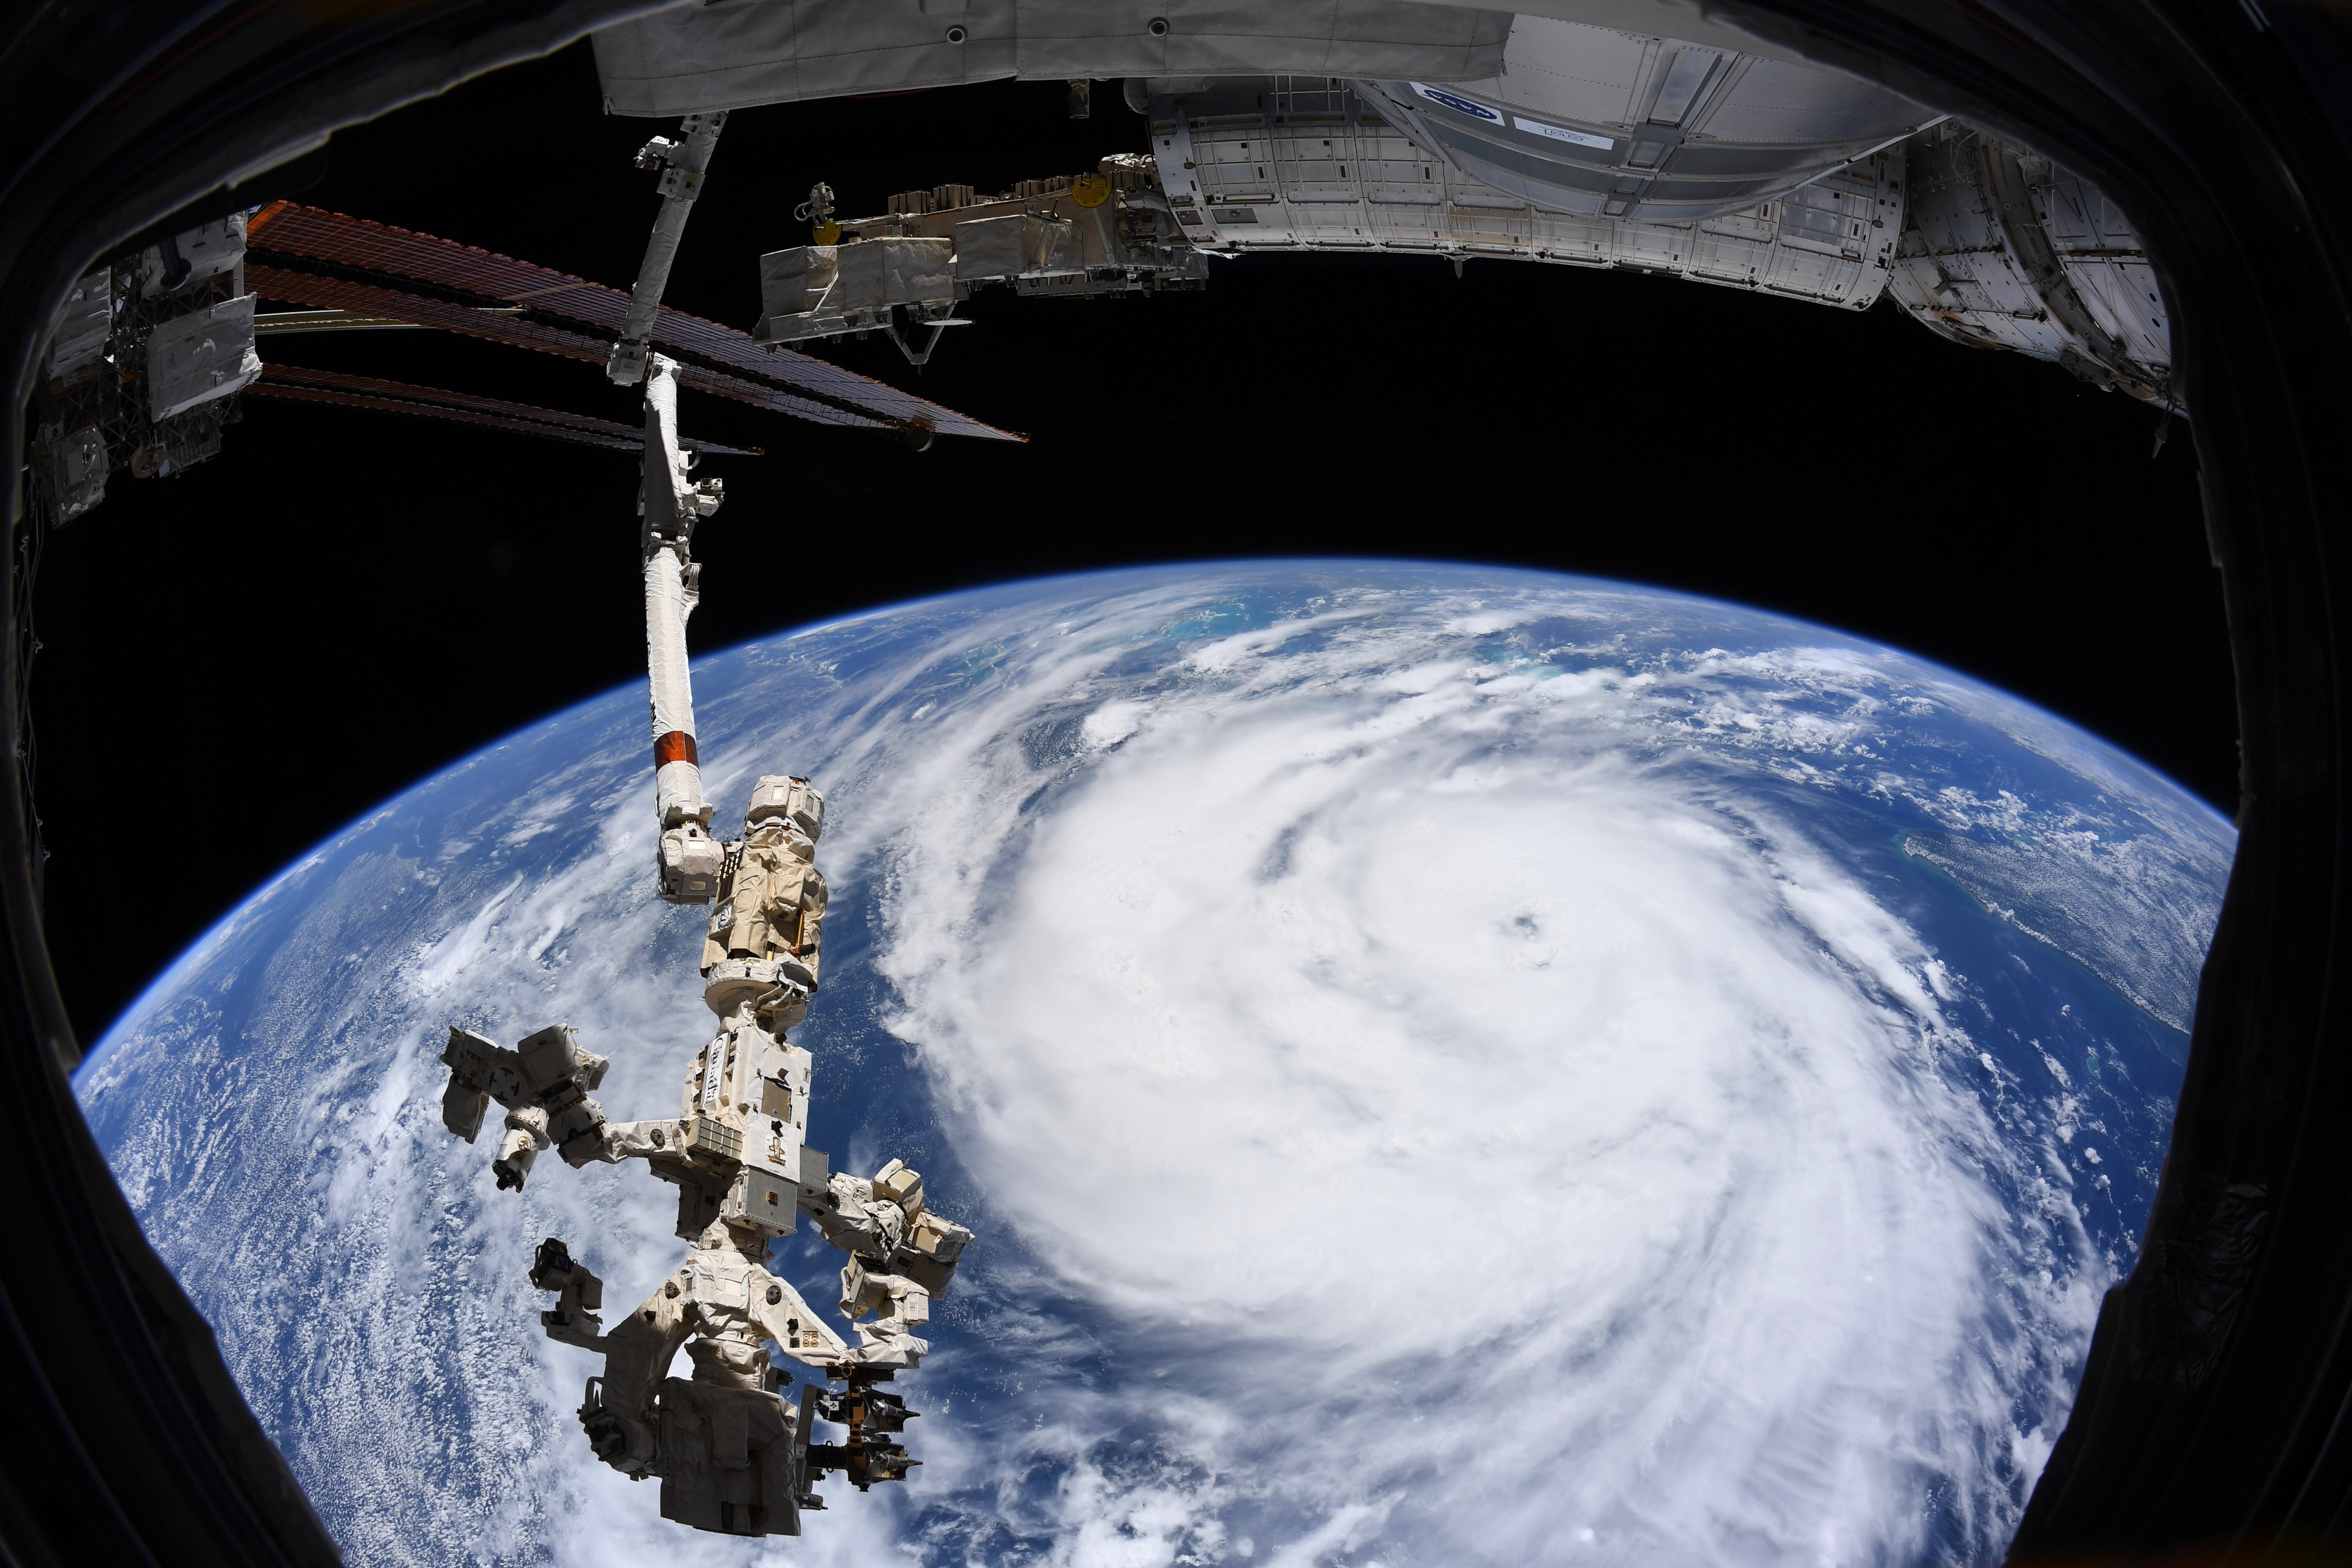 Hurricane Ida is seen in an image taken aboard the International Space Station in August 2021.